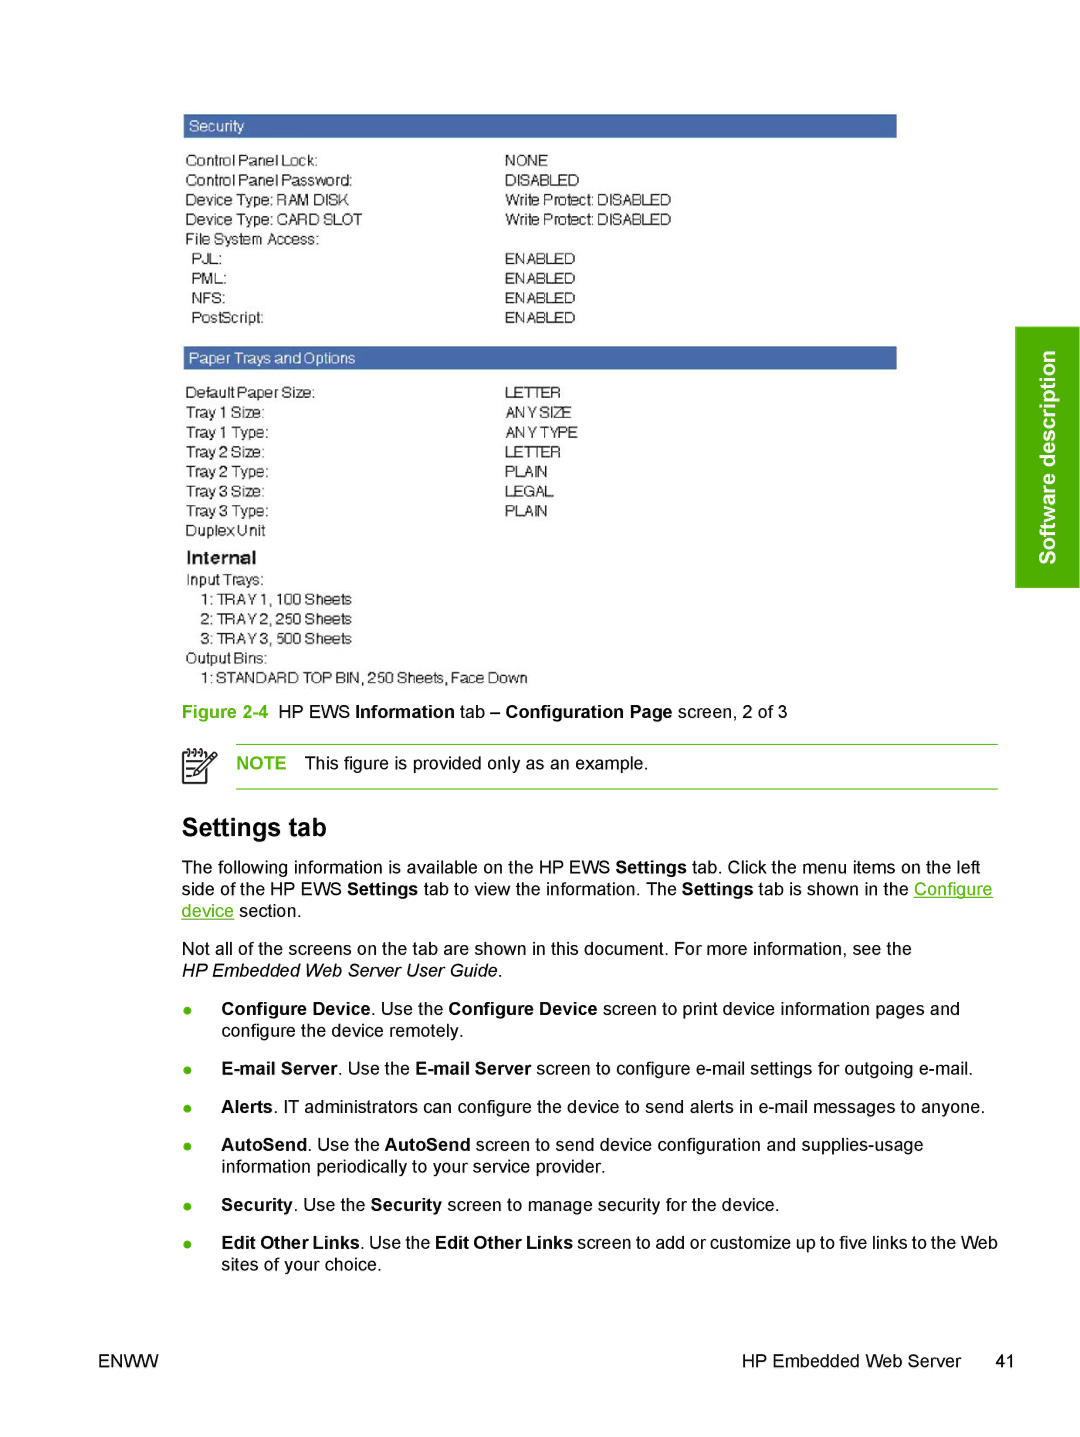 HP 5200L manual Settings tab, 4HP EWS Information tab Configuration Page screen, 2 